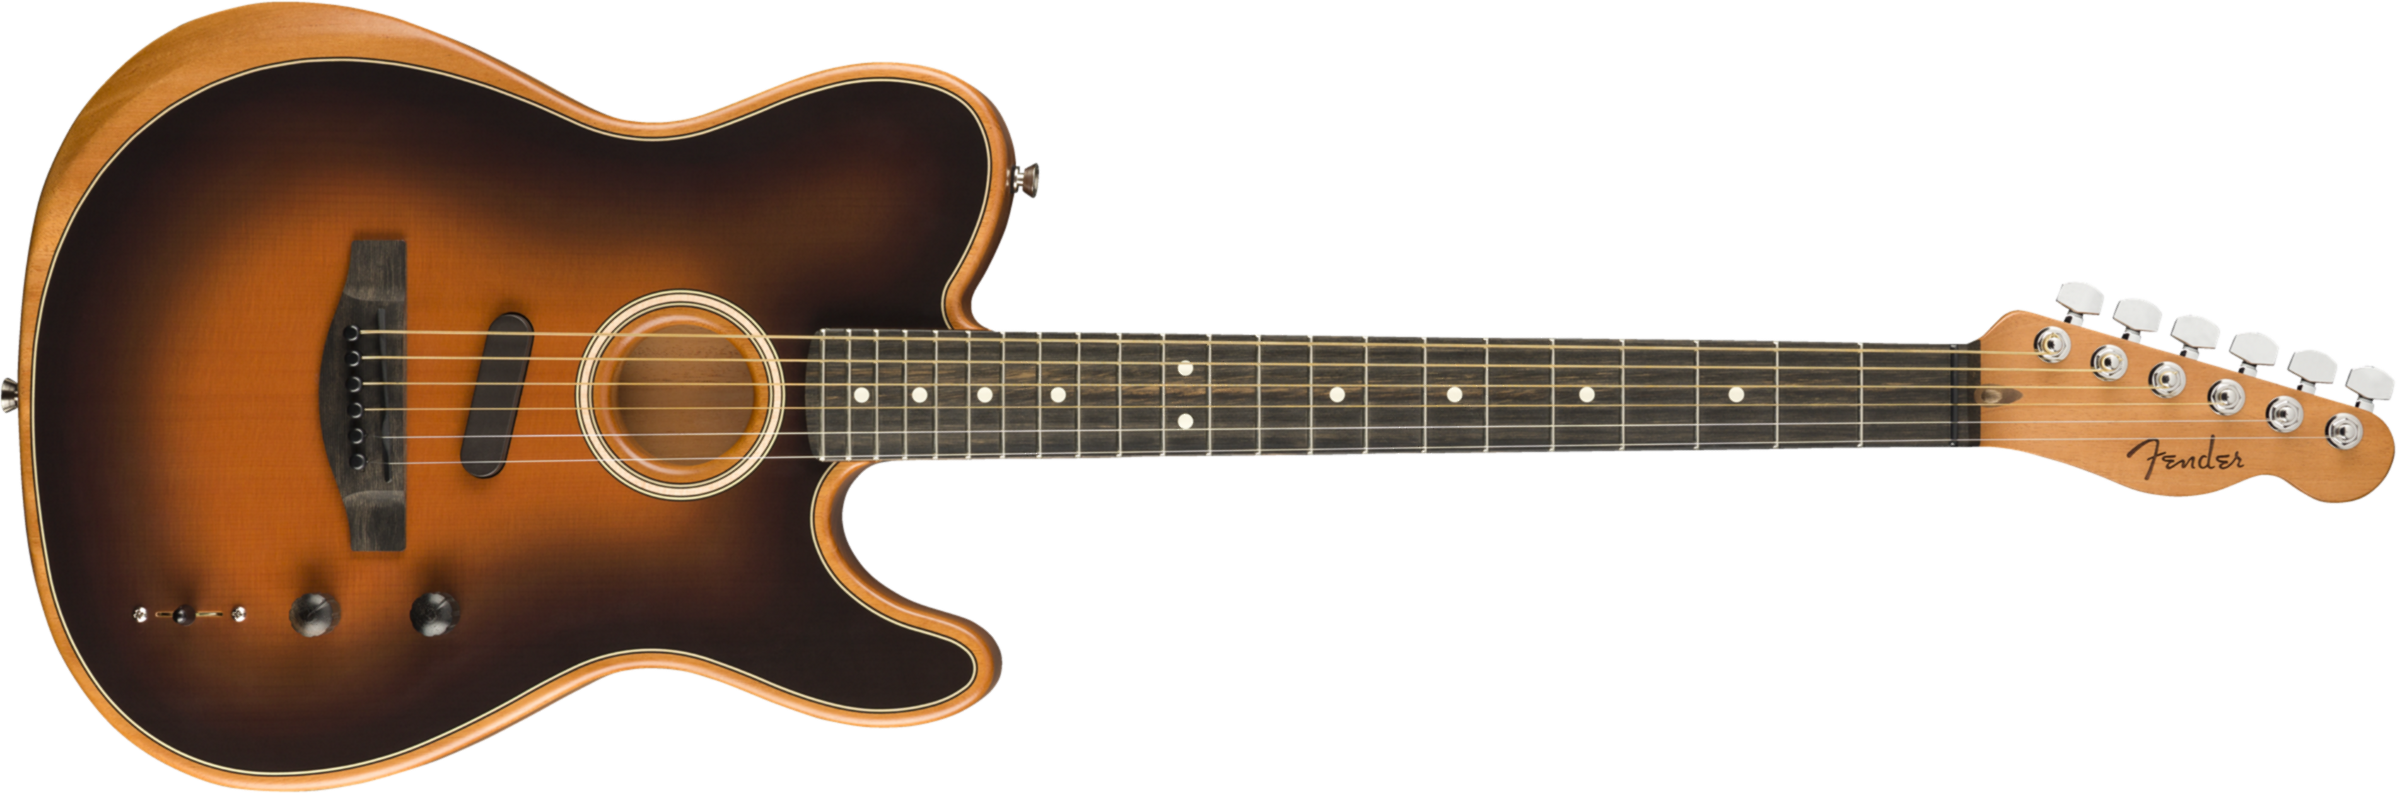 Fender Tele American Acoustasonic Usa Eb - Sunburst - Acoustic guitar & electro - Main picture